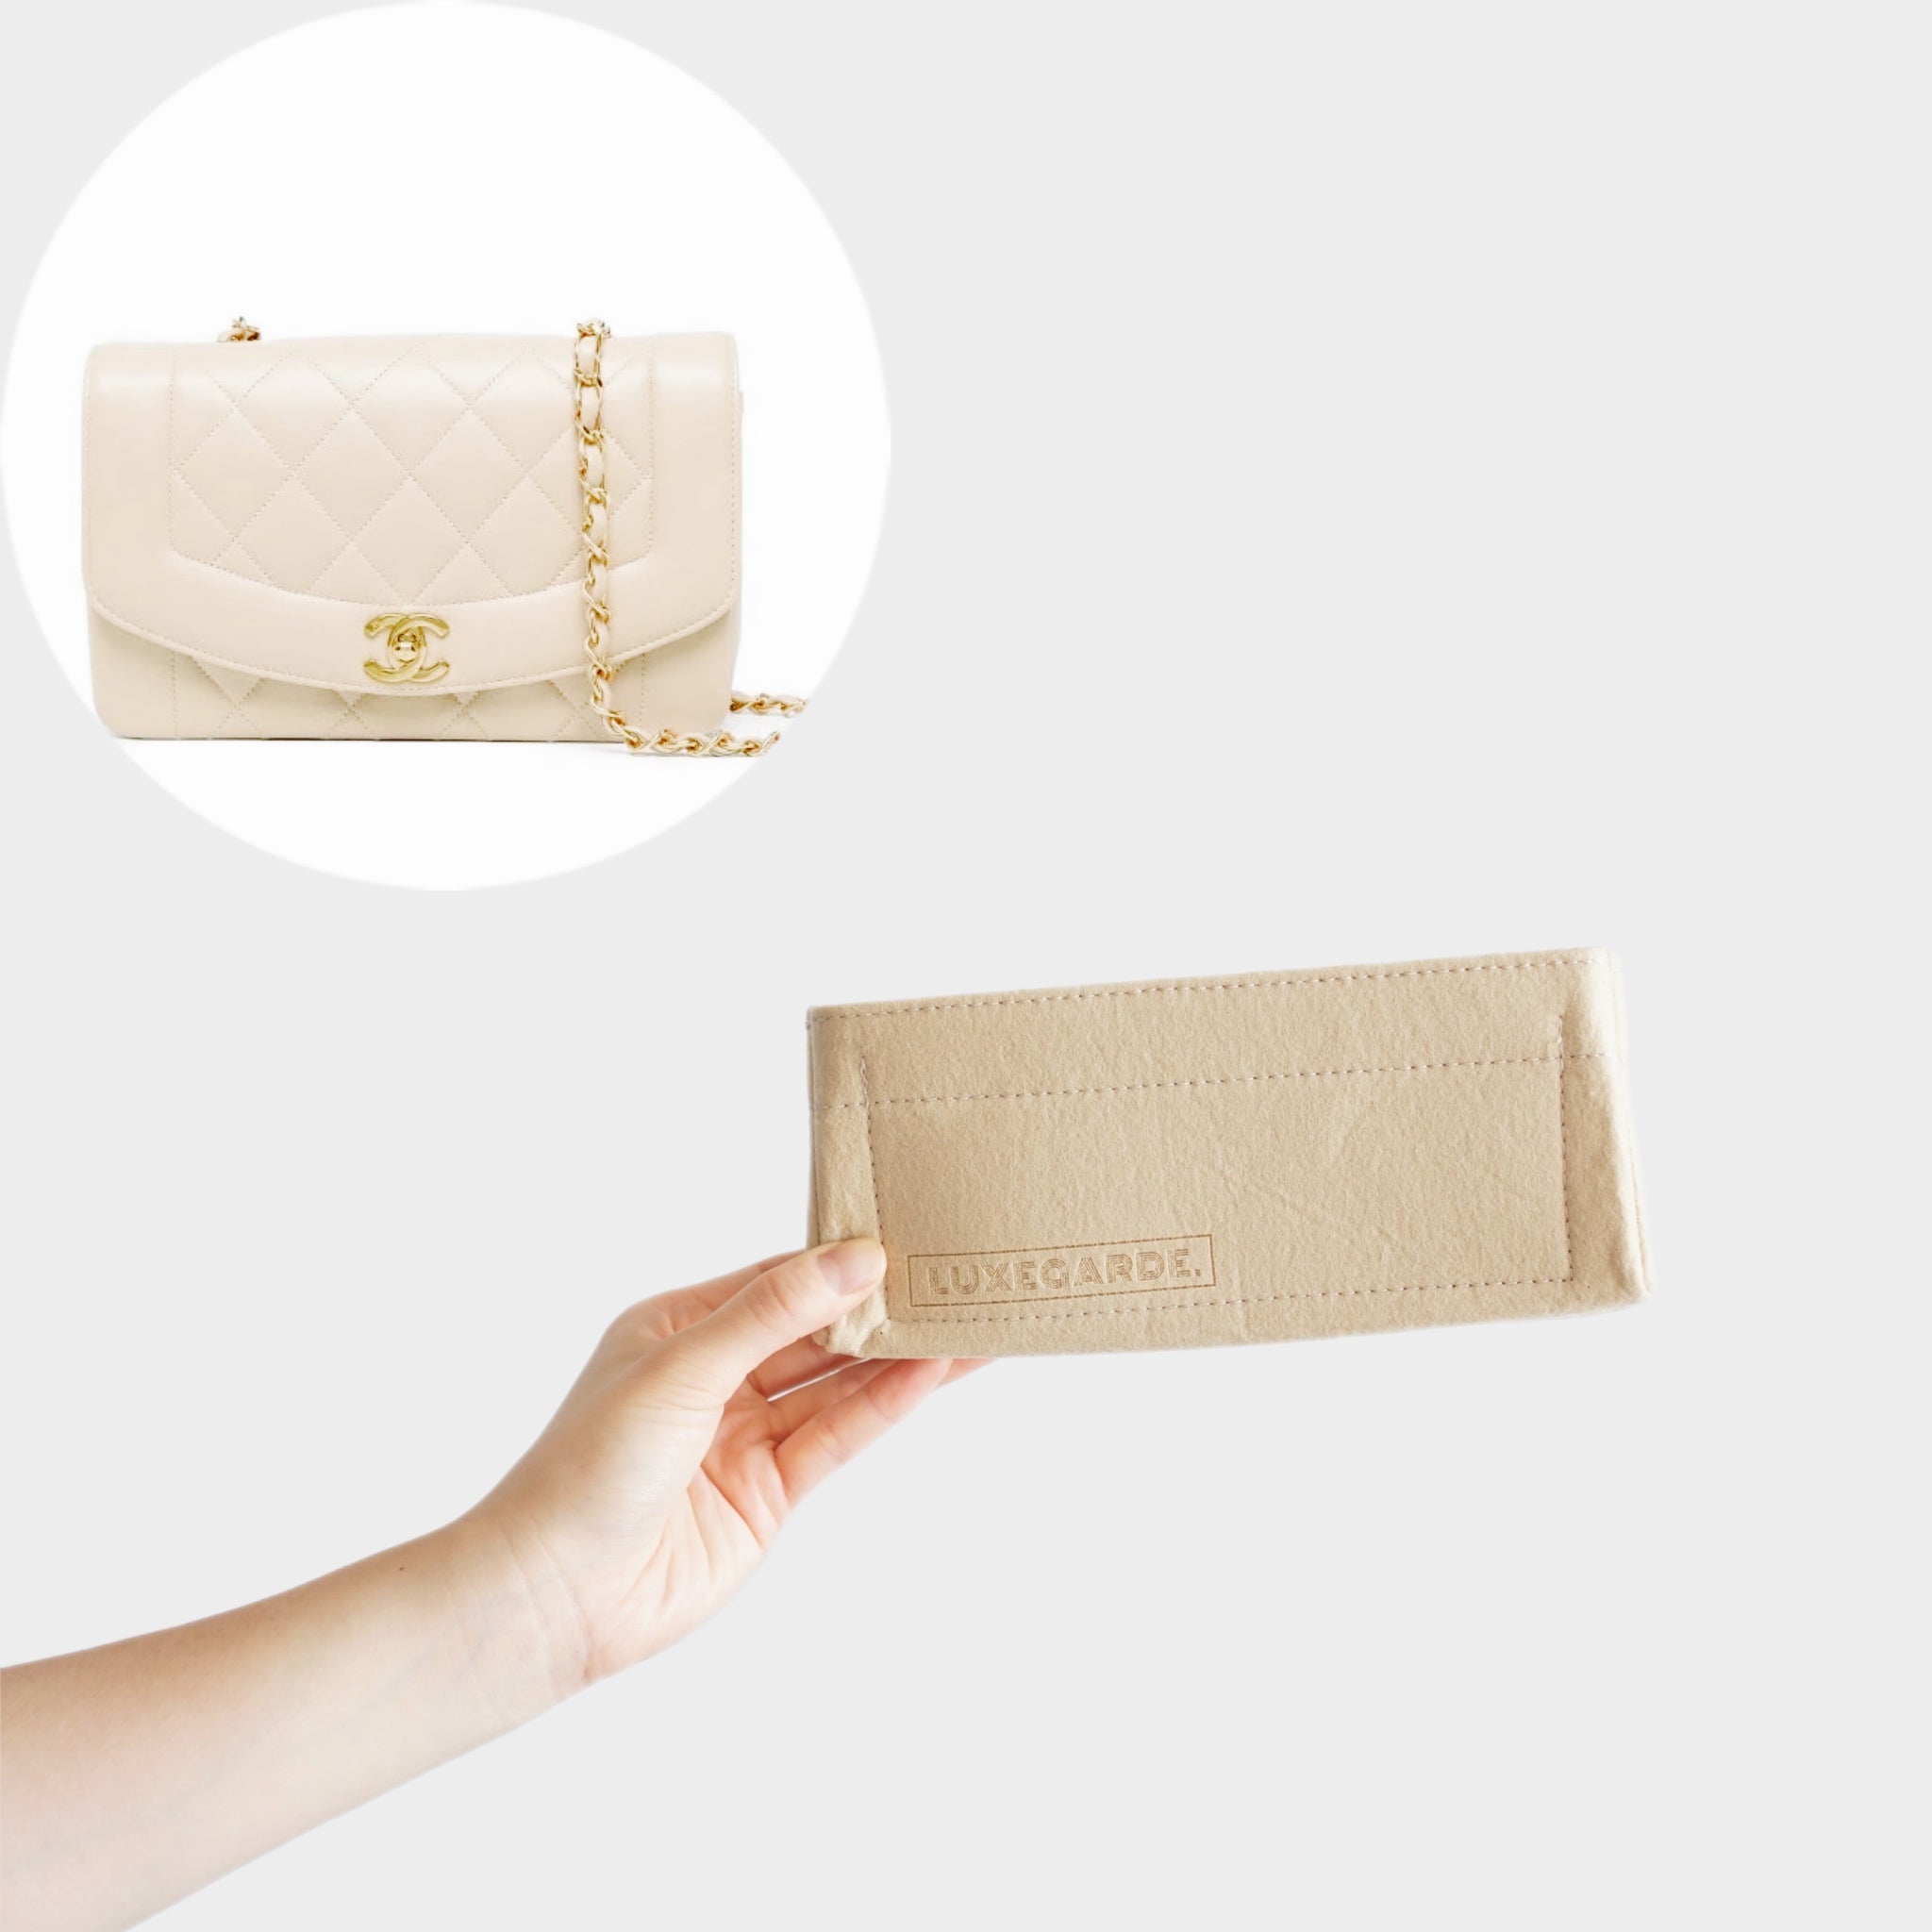 Bag Organizer Insert for Chanel Small Diana Purse – Luxegarde